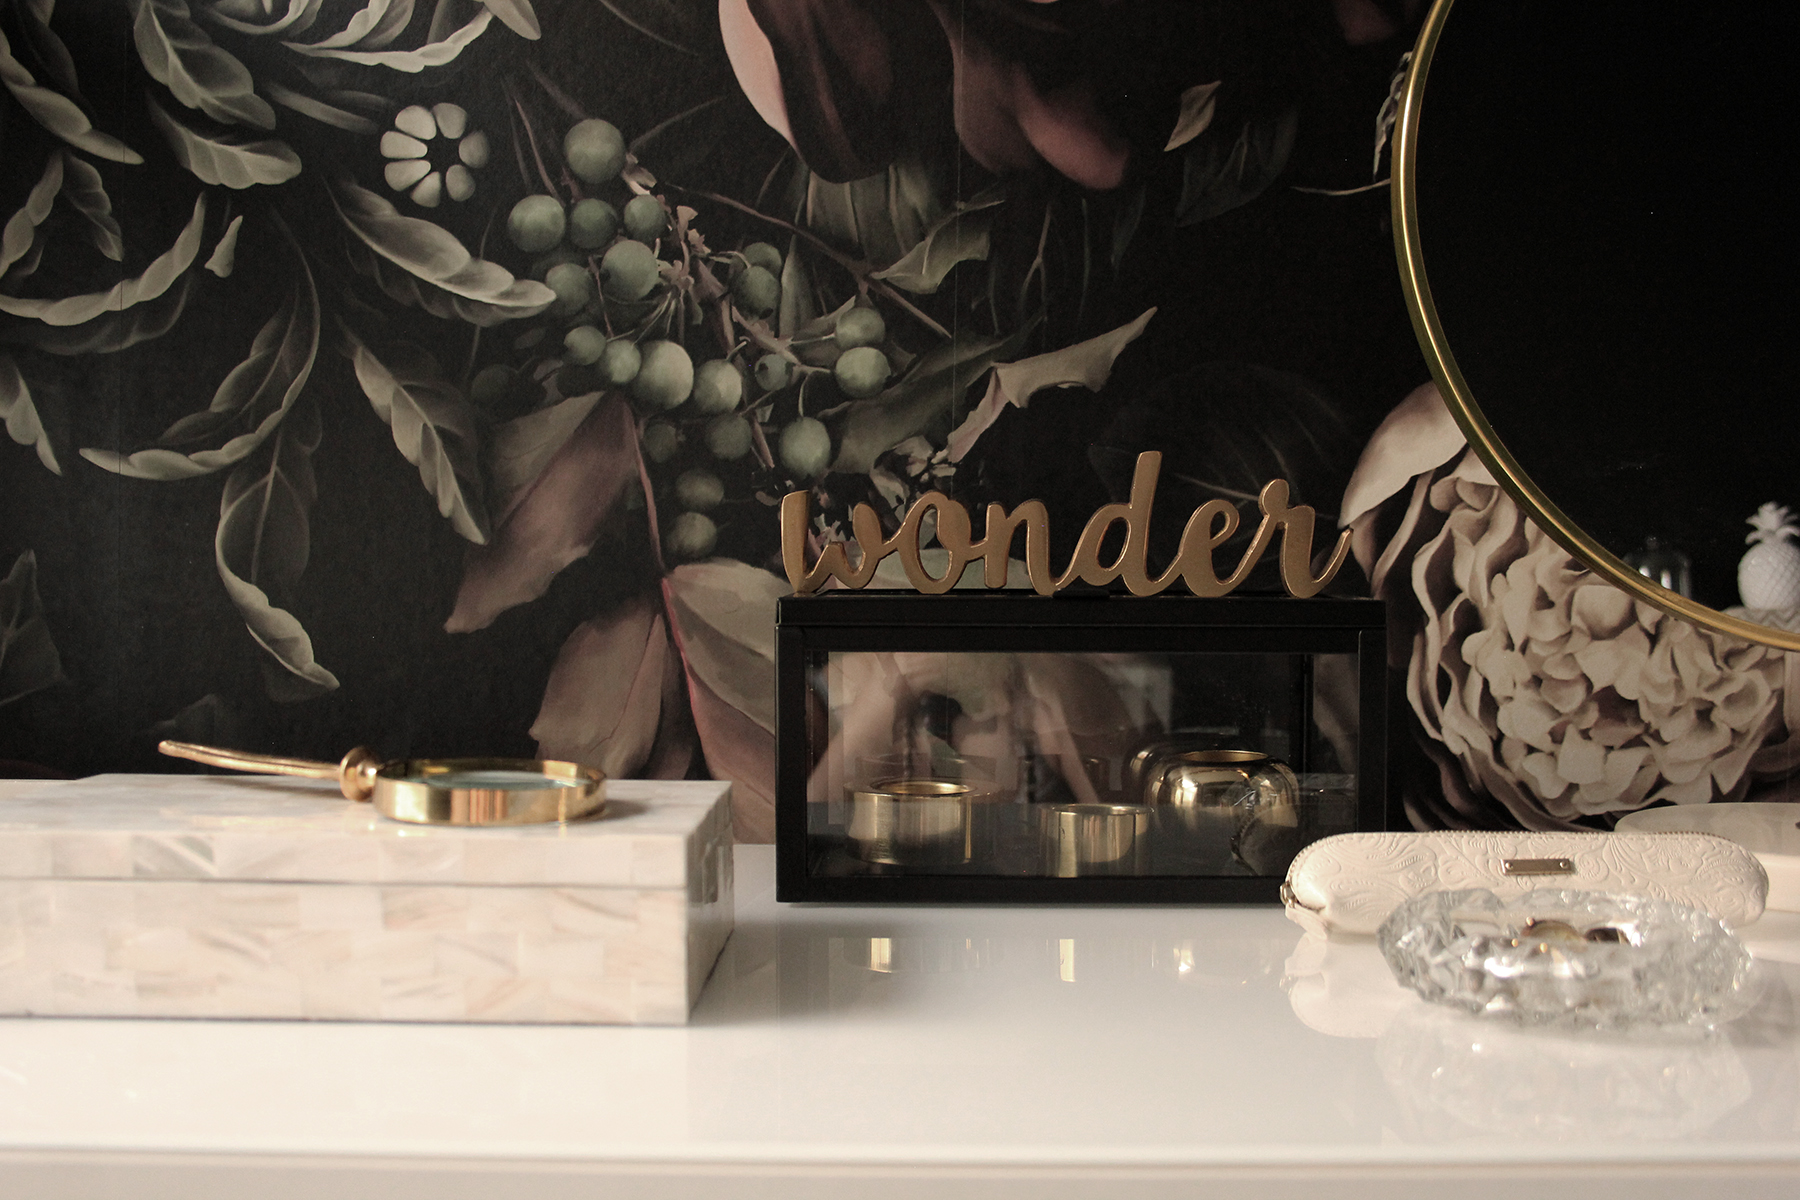 Preciously Me blog : One Room Challenge - Bedroom makeover reveal. Ellie Cashman Dark Floral wallpaper